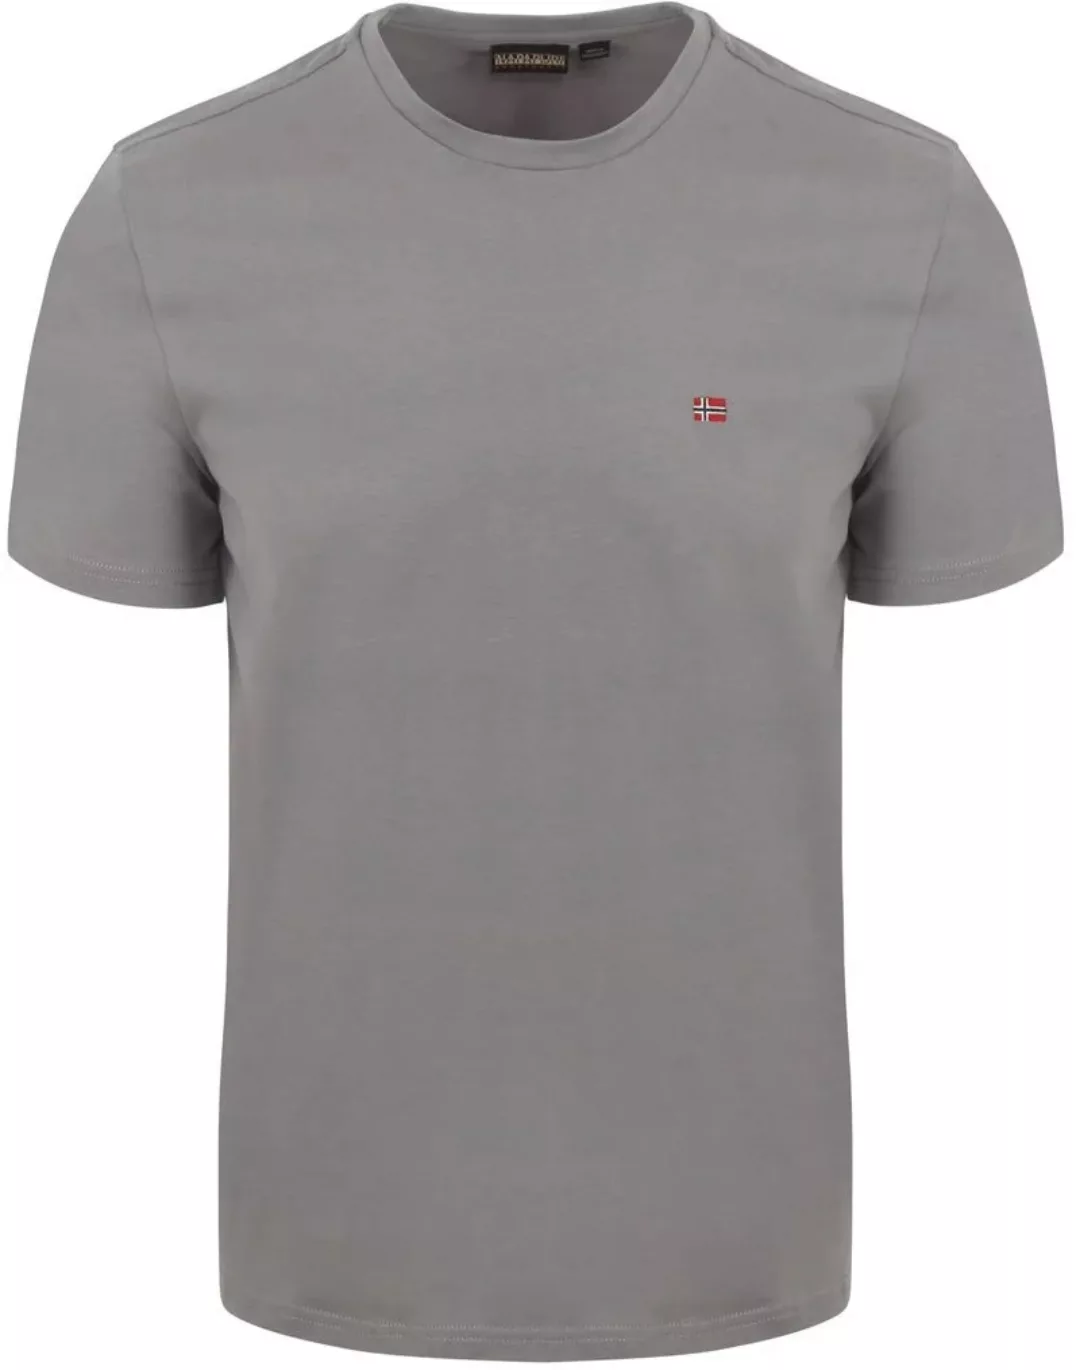 Napapijri Salis T-shirt Mid Grau - Größe L günstig online kaufen